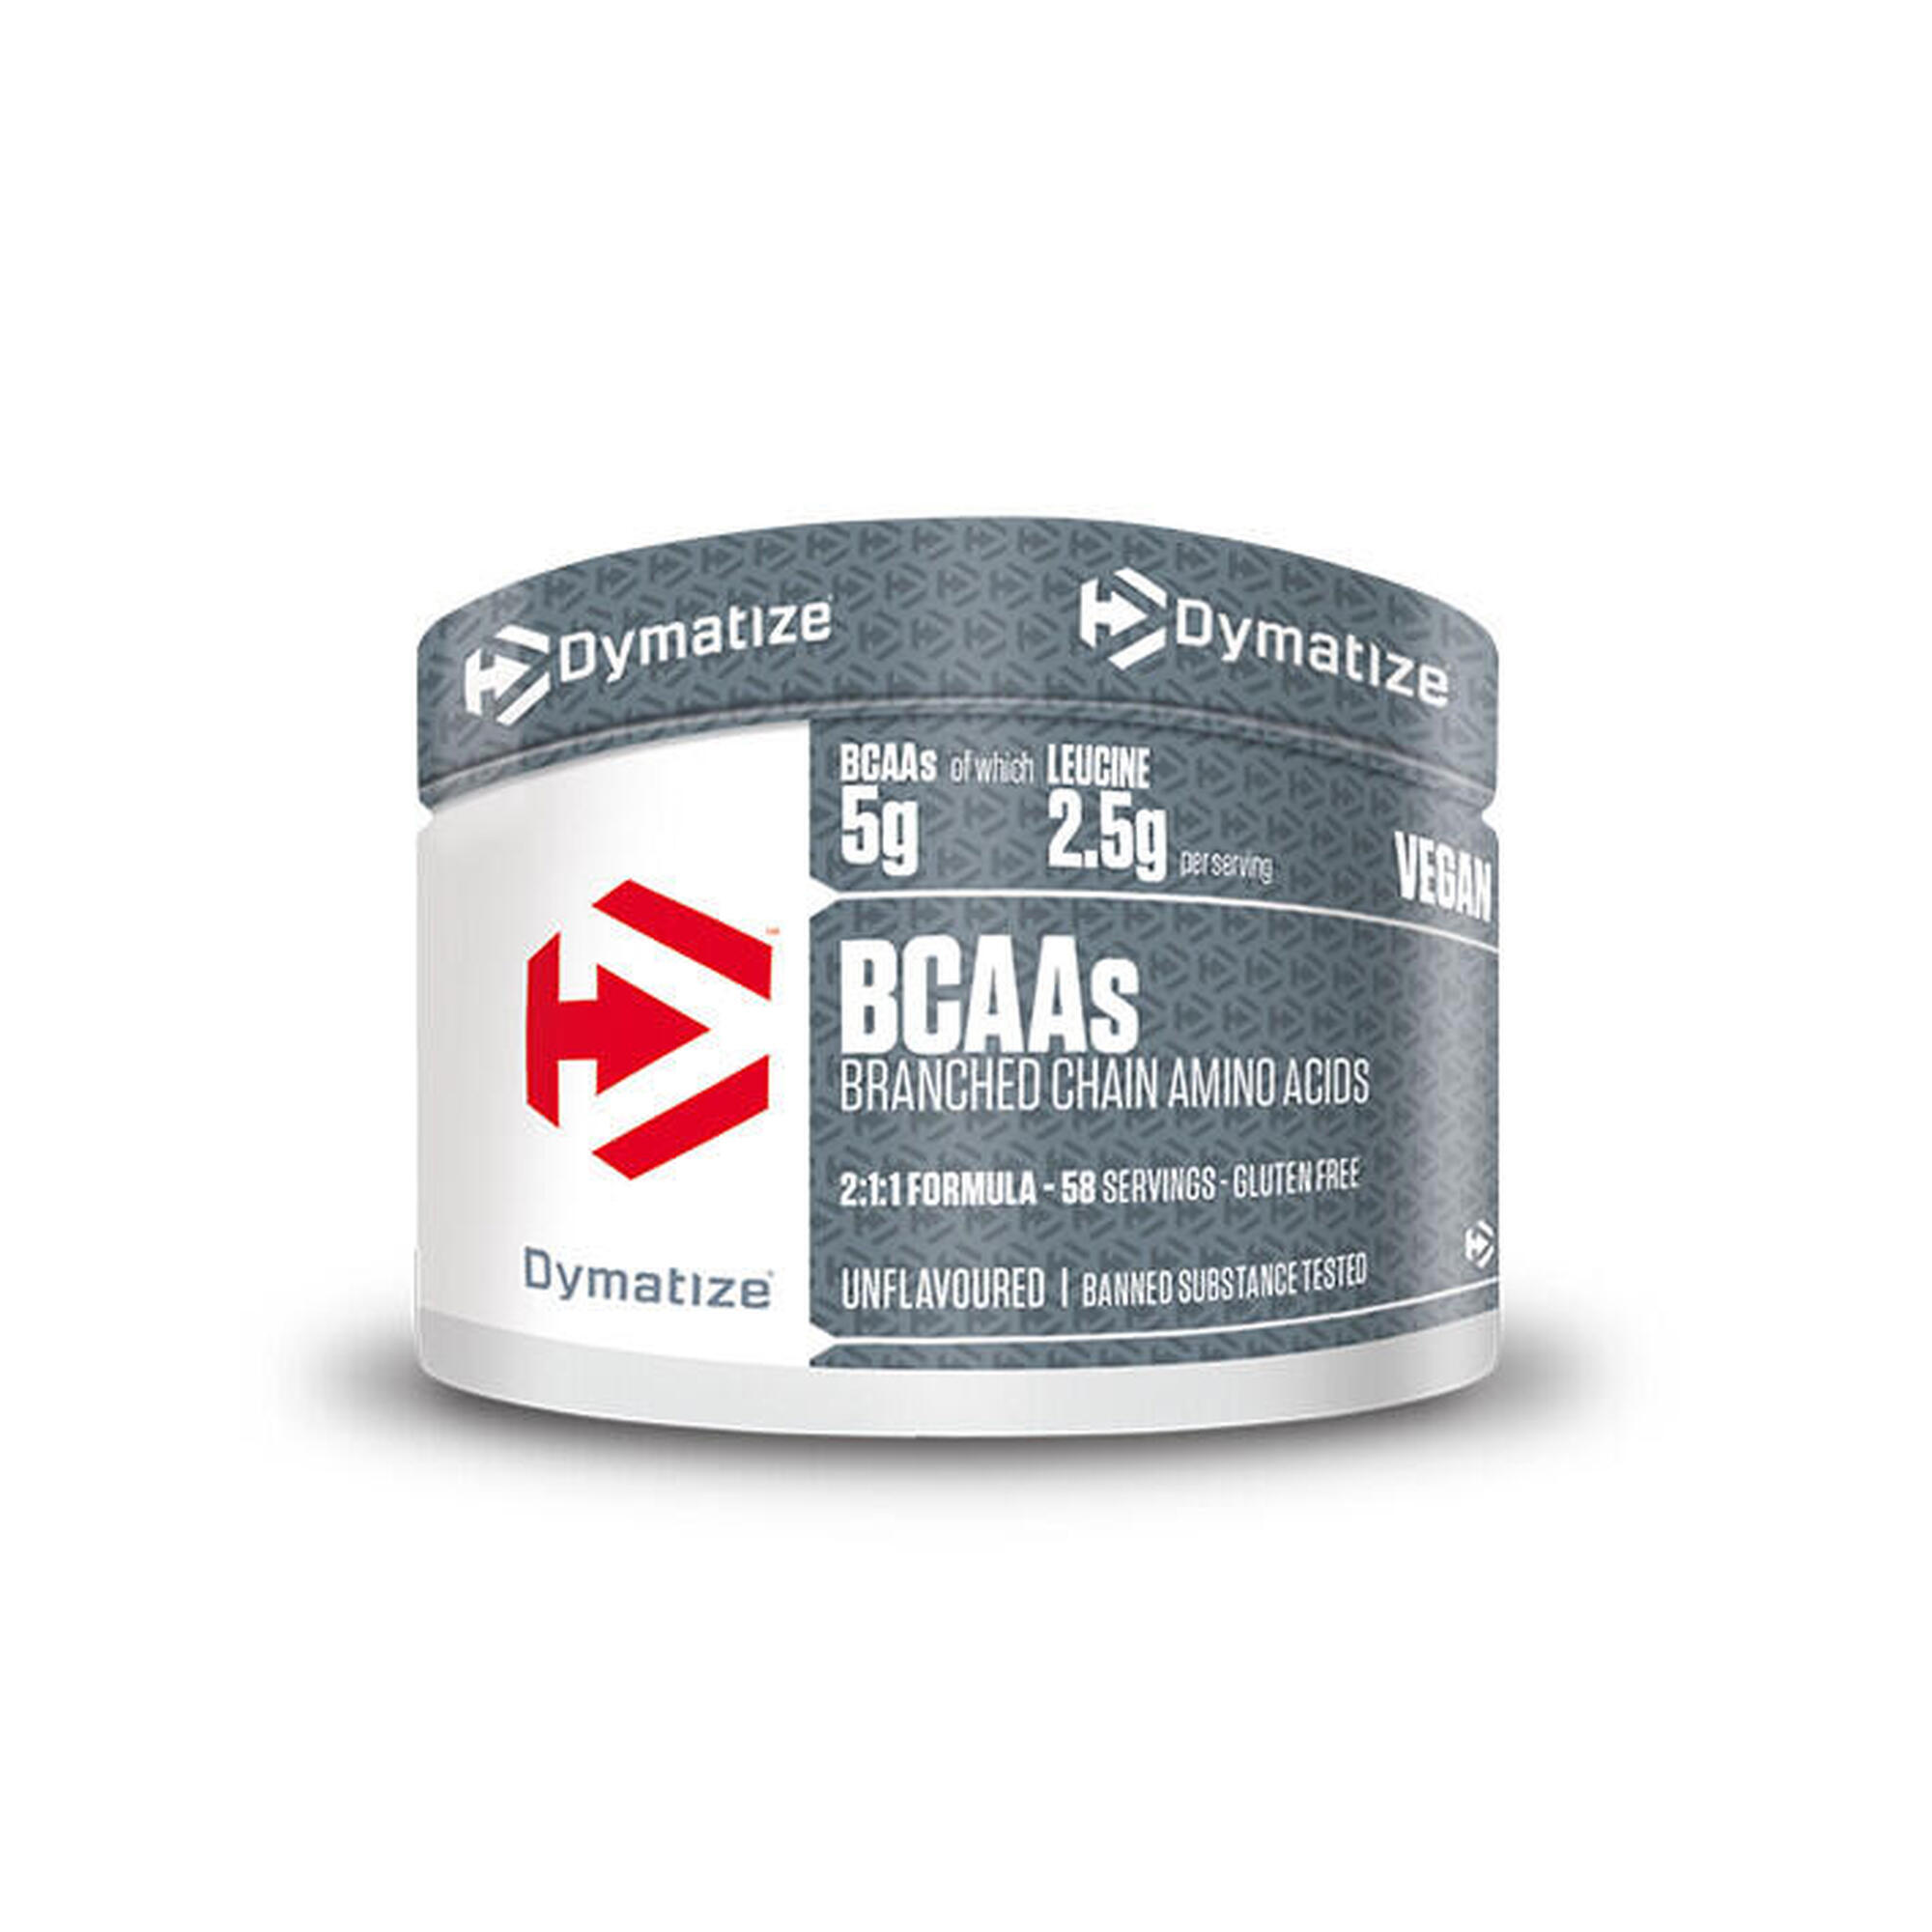 Dymatize BCAAs 300g - Unflavored Powder